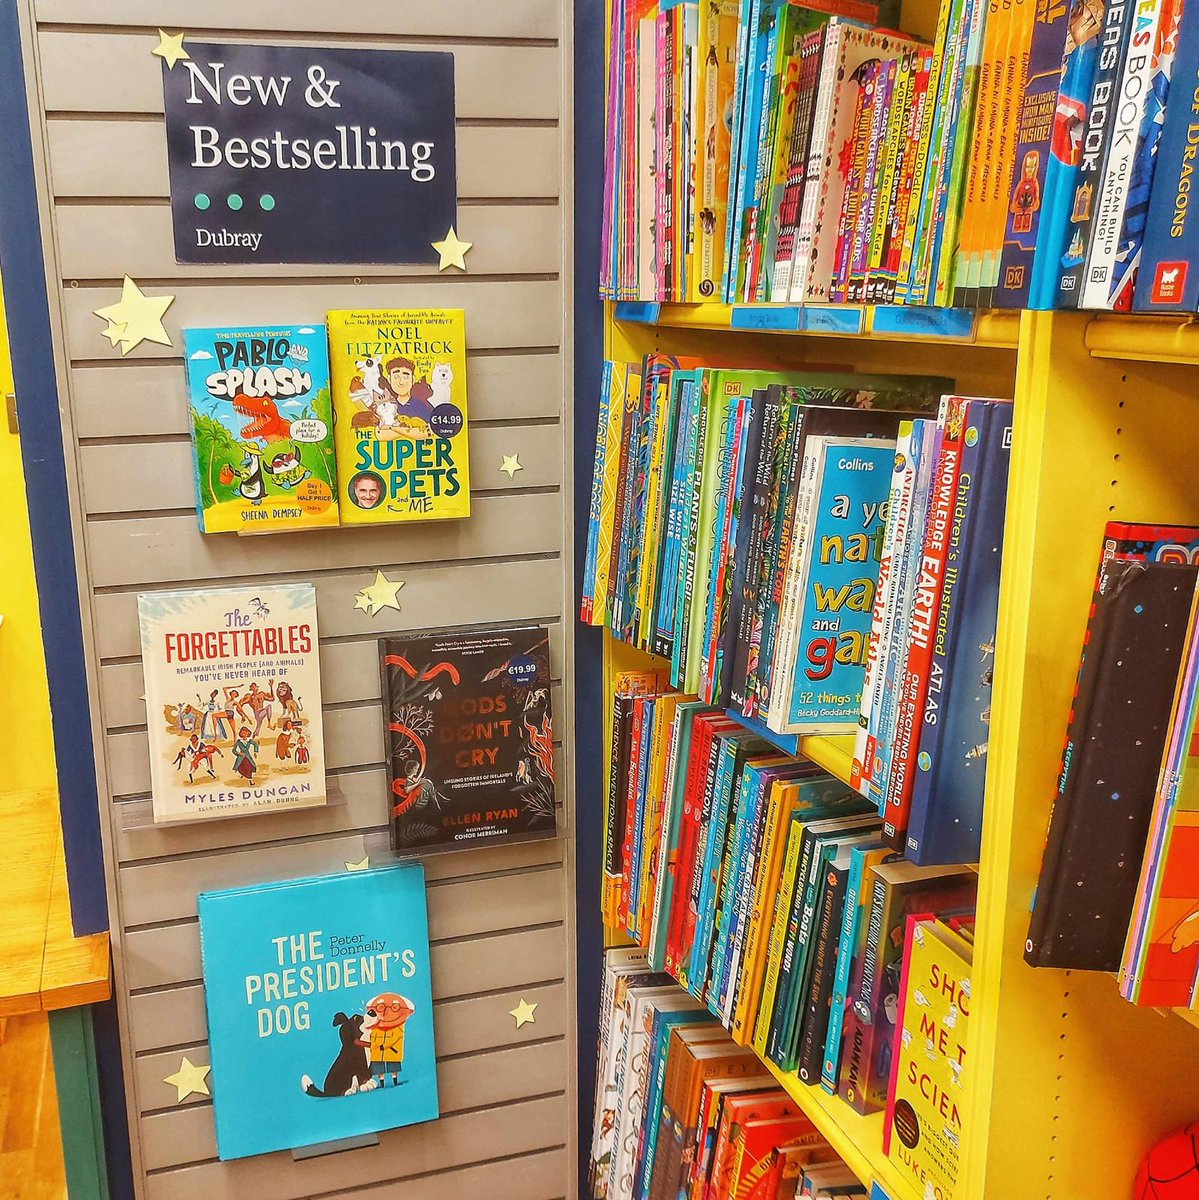 Some of the bestselling Irish children's books right now at #DubrayRathmines #DiscoverIrishKidsBooks @EllenRyanWrites @donnellypa @MylesDungan1 @SheenaDempsey @ProfNoelFitz dubraybooks.ie